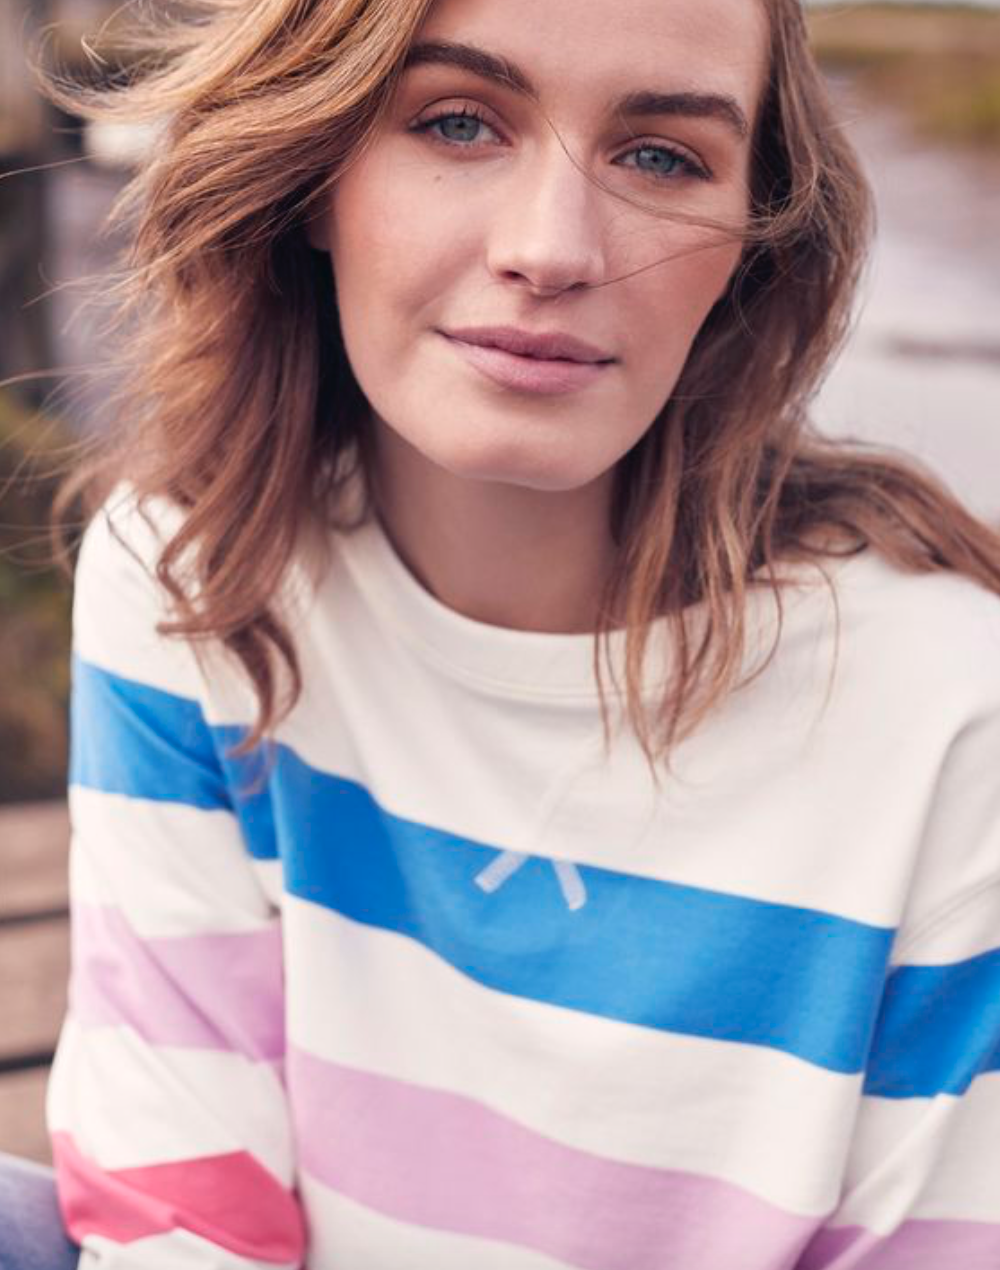 Joules - Women's Monique Crew Neck Sweatshirt - Multi Stripe